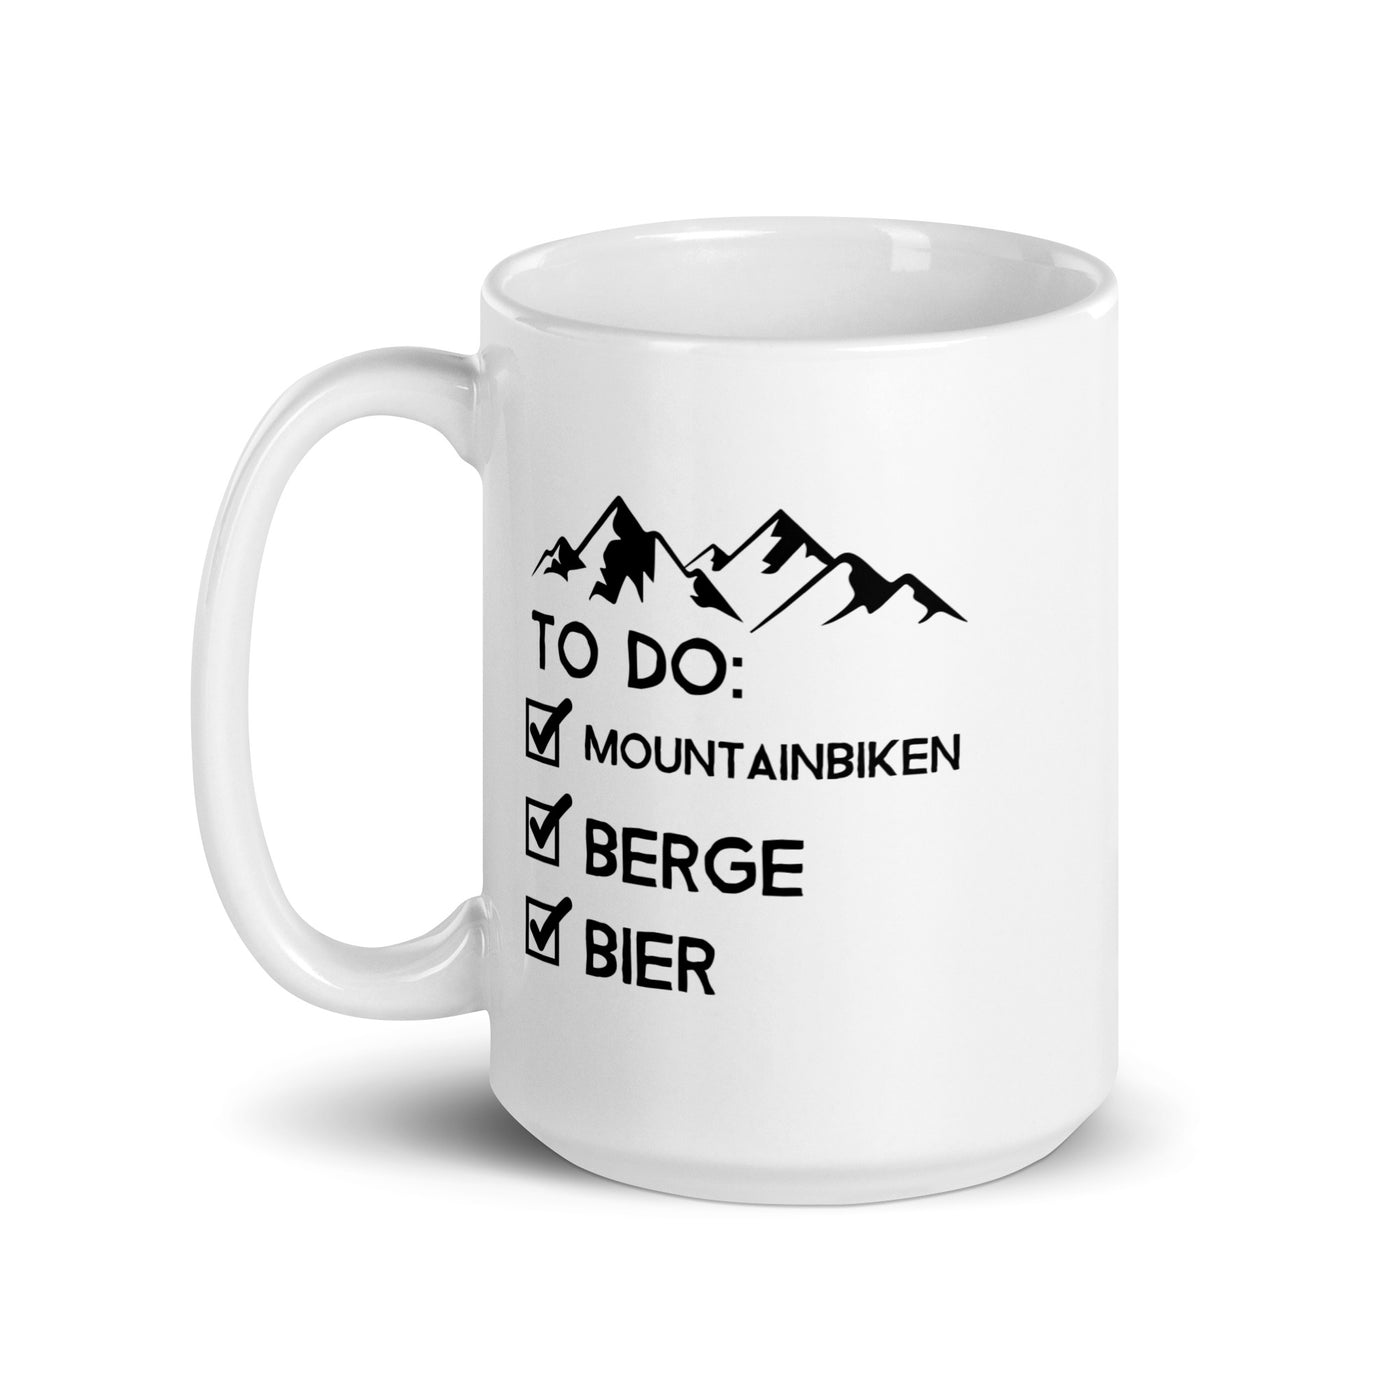 To Do Liste - Mountainbiken, Berge, Bier - Tasse mountainbike